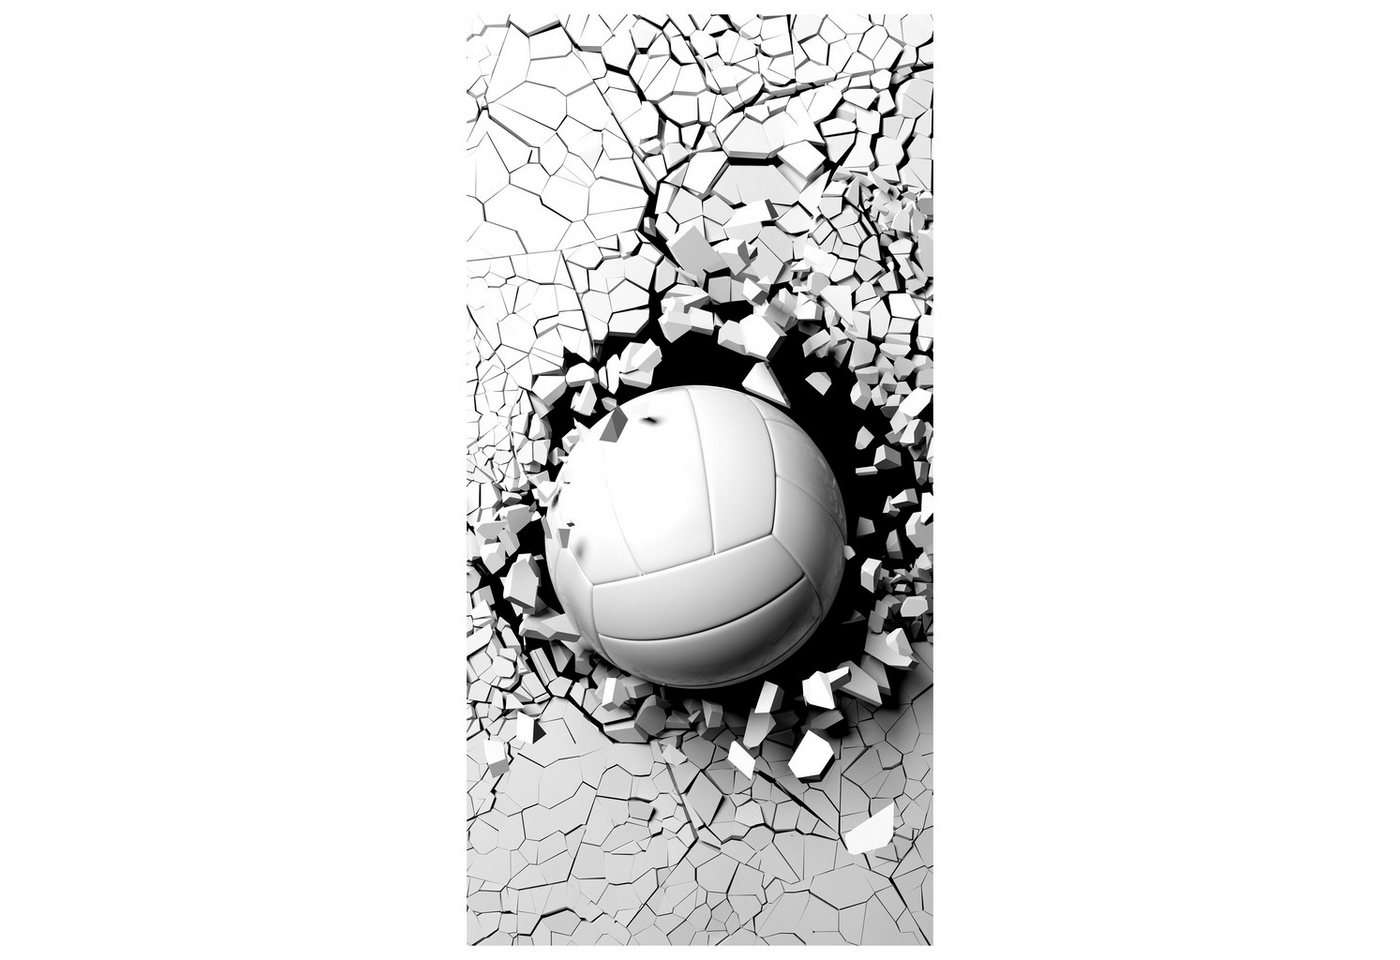 wandmotiv24 Türtapete Volleyball durch Wand, 3D Motiv, Sport, glatt, Fototapete, Wandtapete, Motivtapete, matt, selbstklebende Vliestapete von wandmotiv24